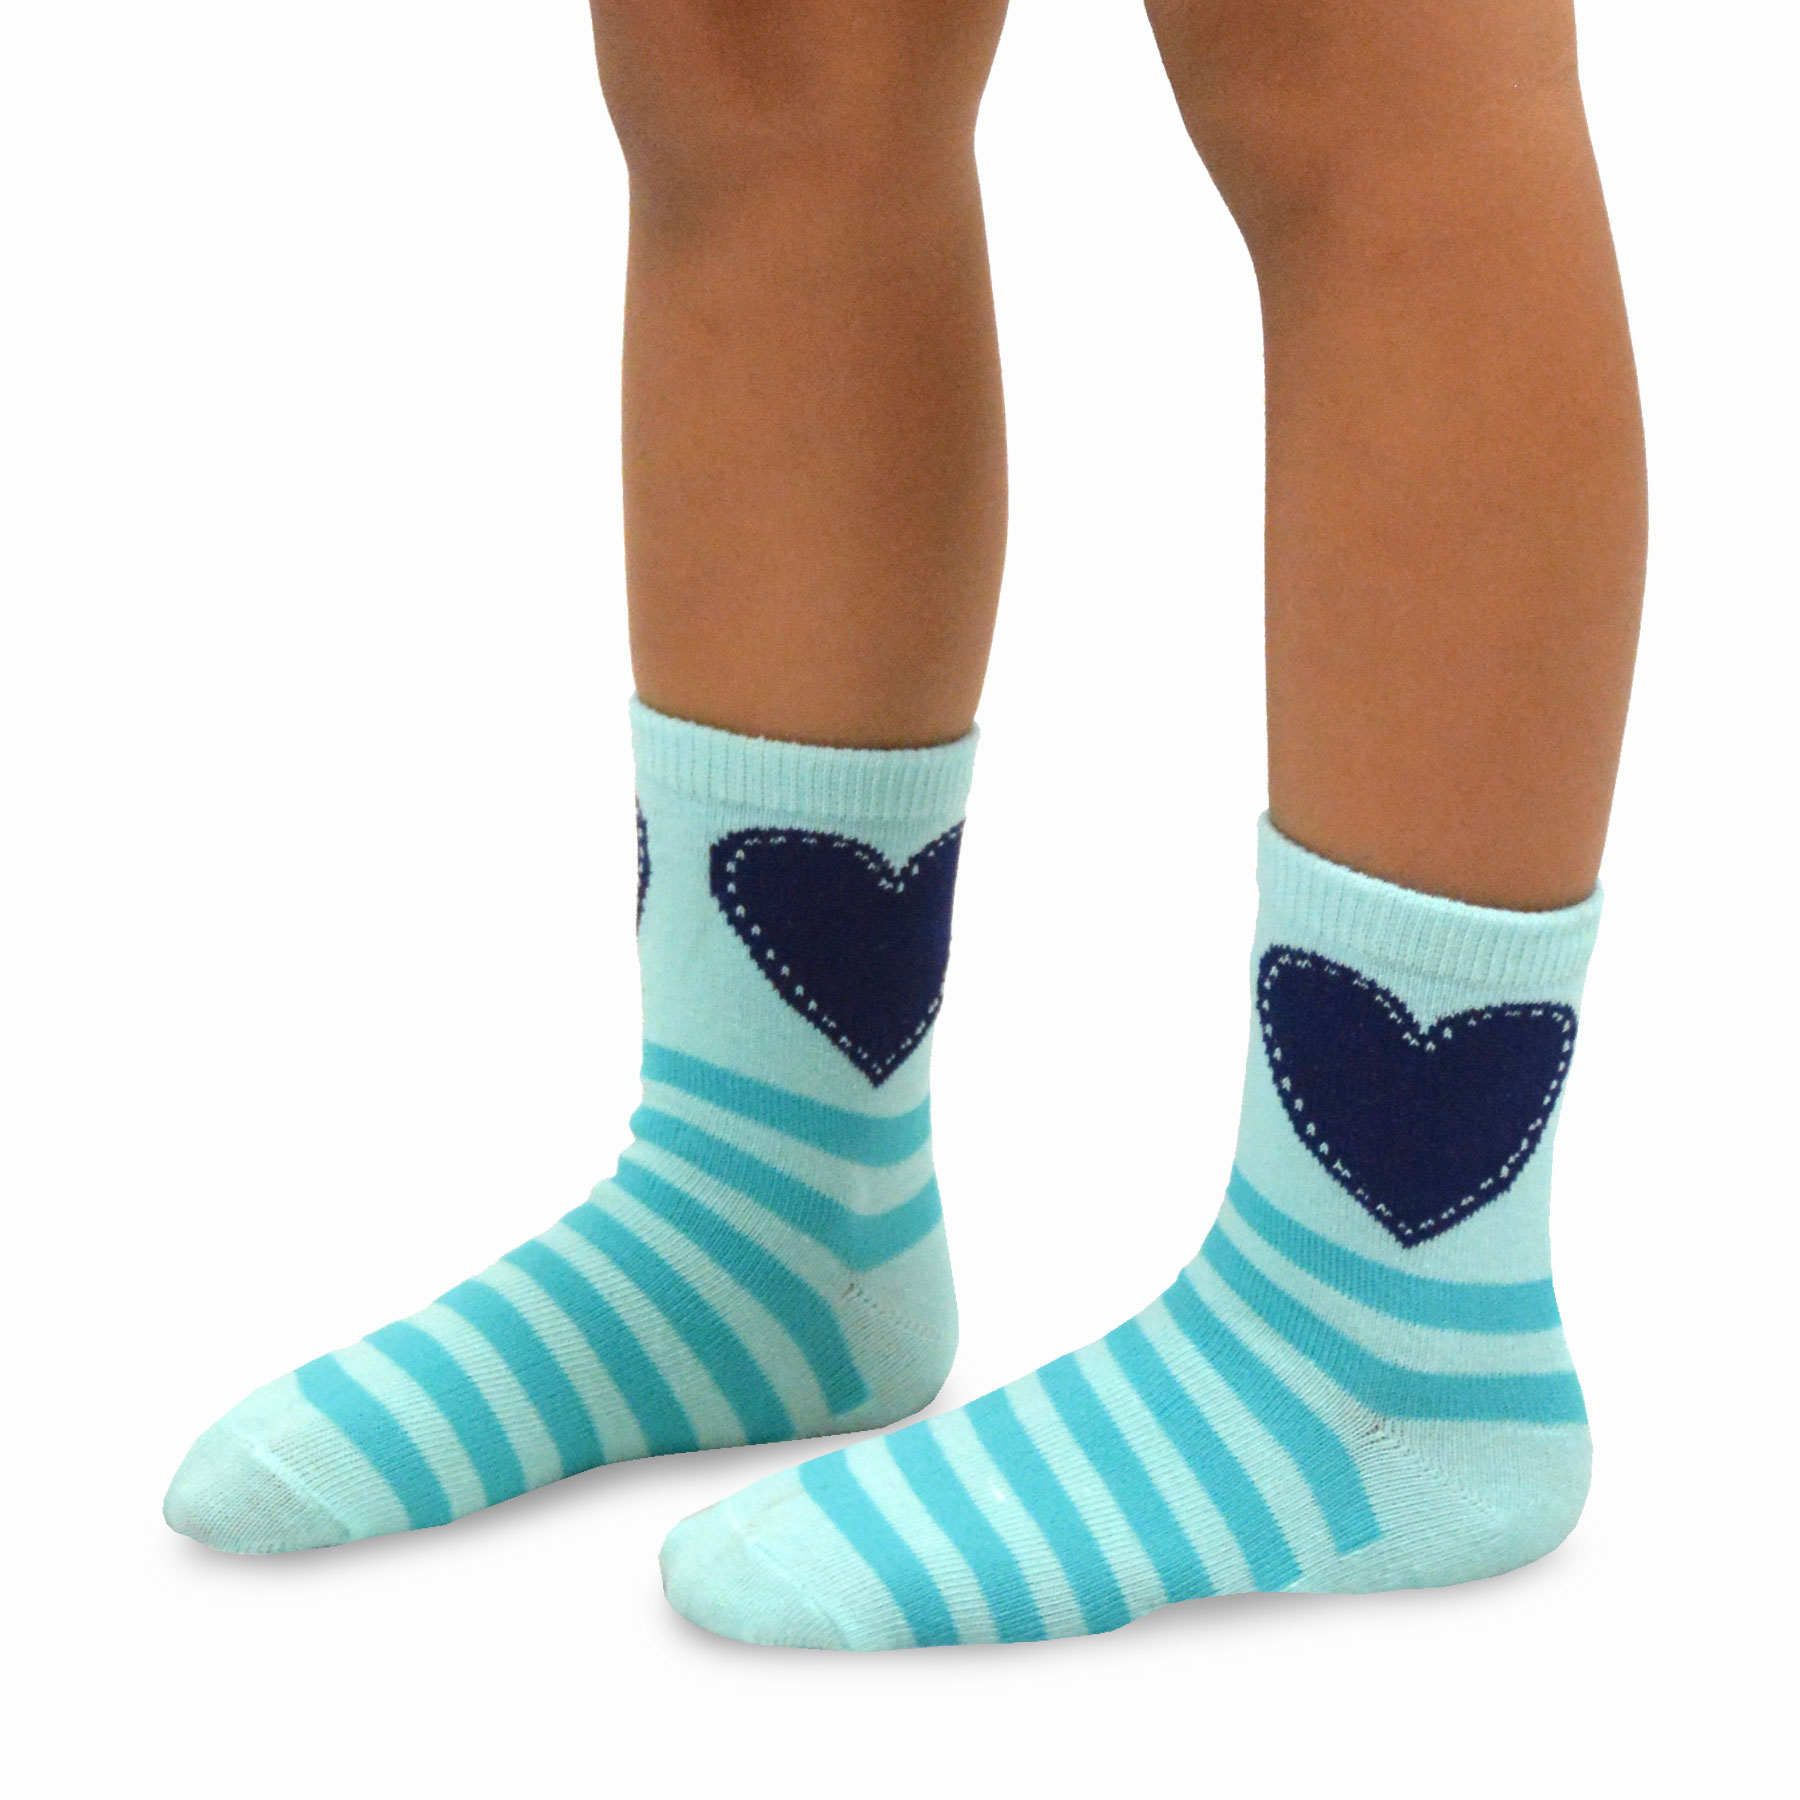 TeeHee Kids Cotton Fashion Crew Socks 6 Pair Pack for Girls - image 2 of 7